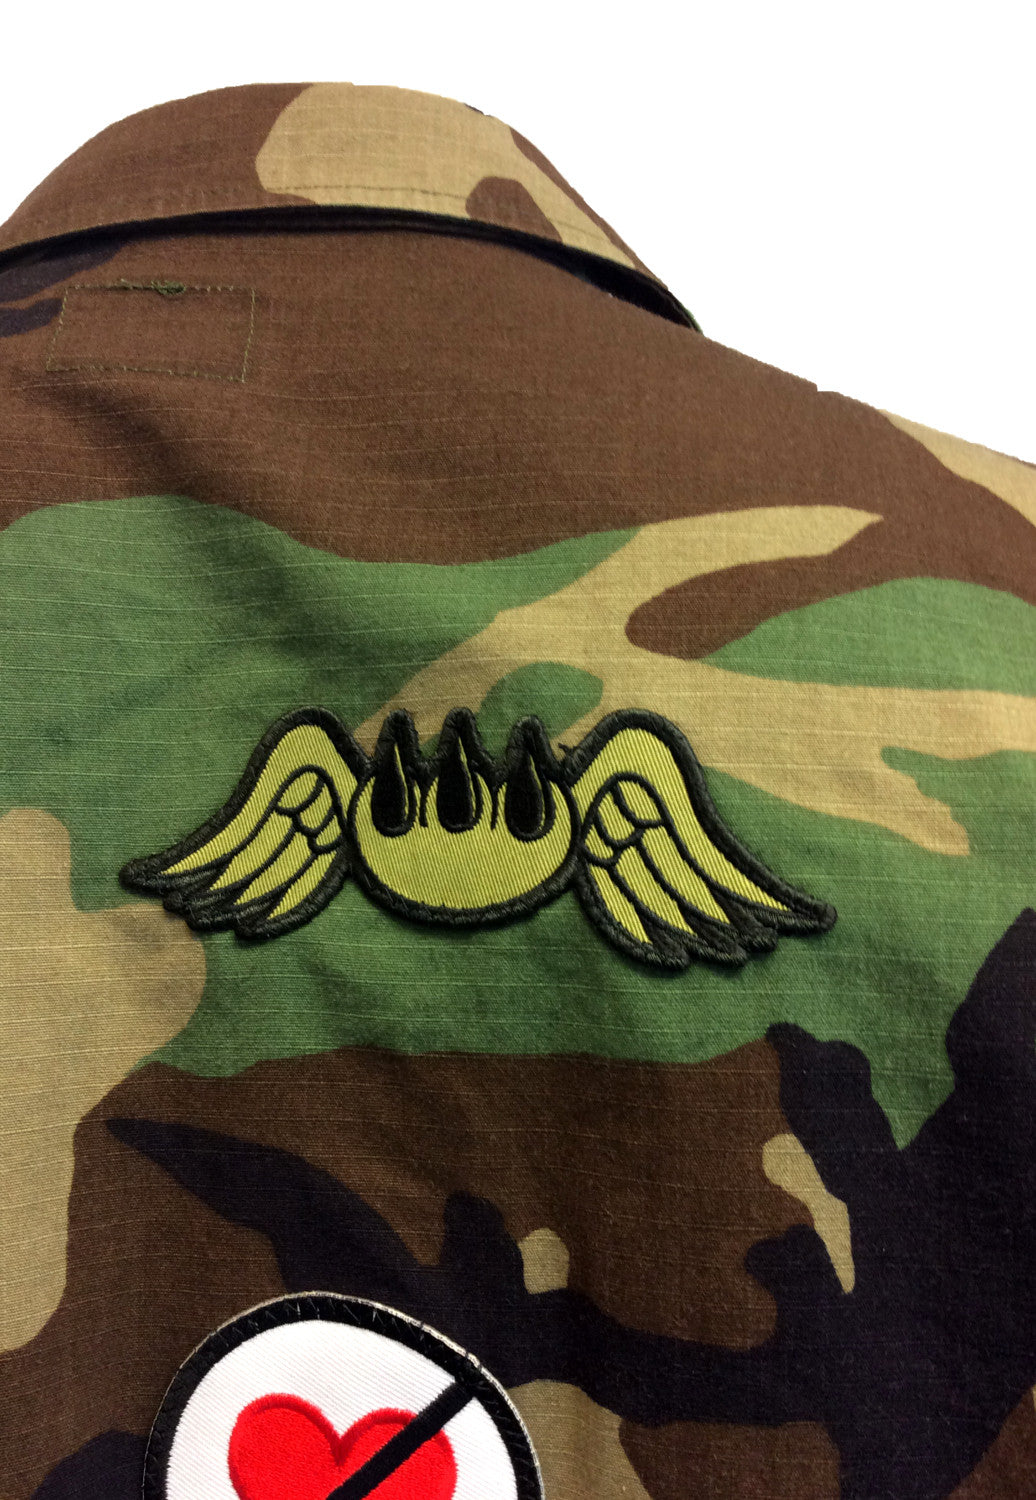 Army Patch Jacket 1